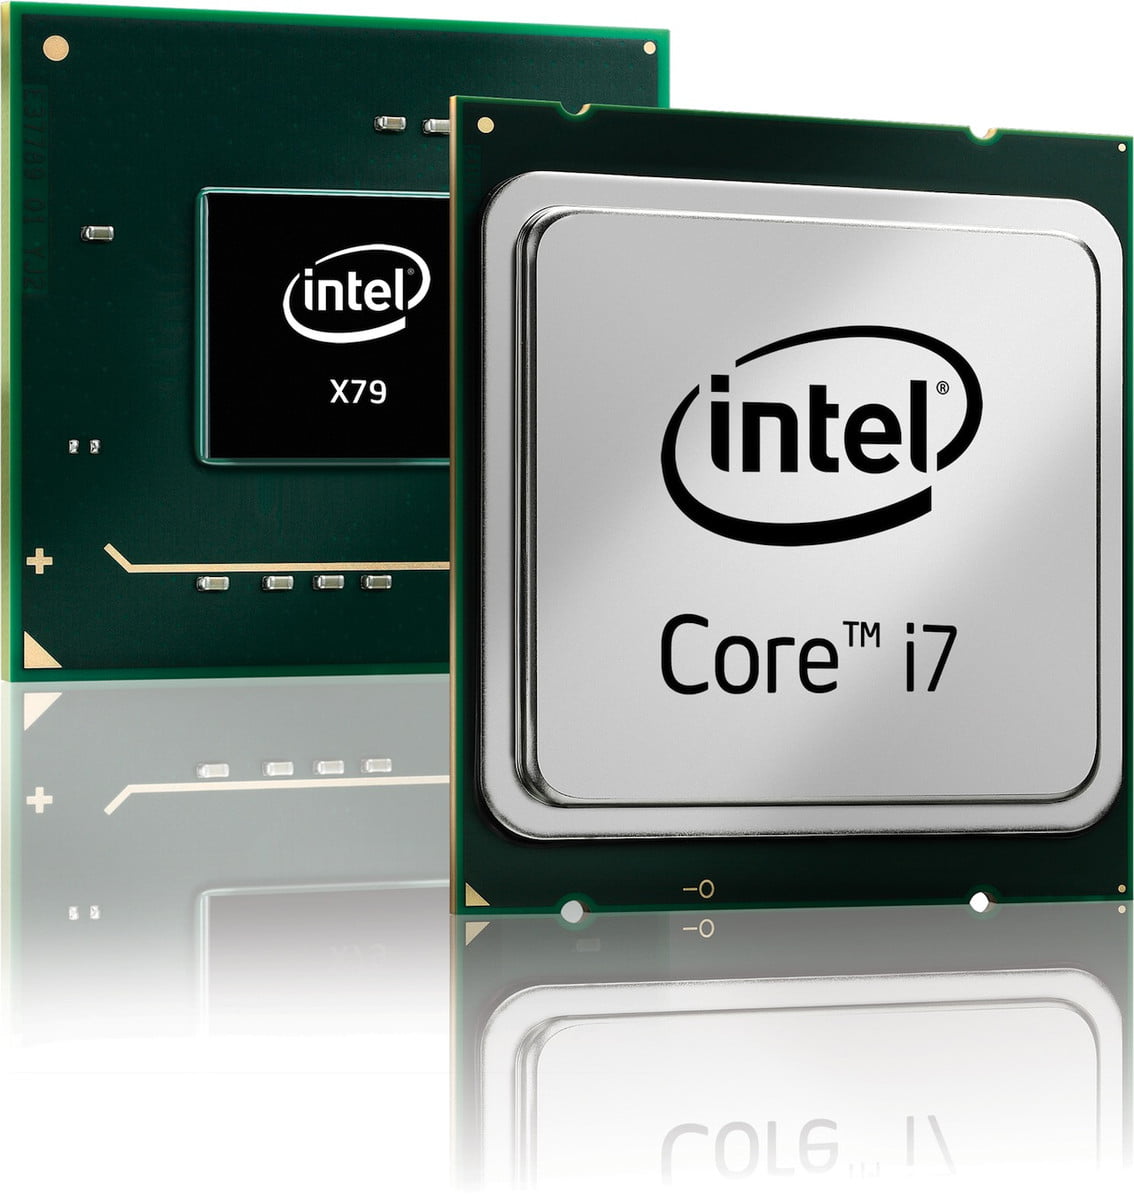 Intel-core-i7-2960xm